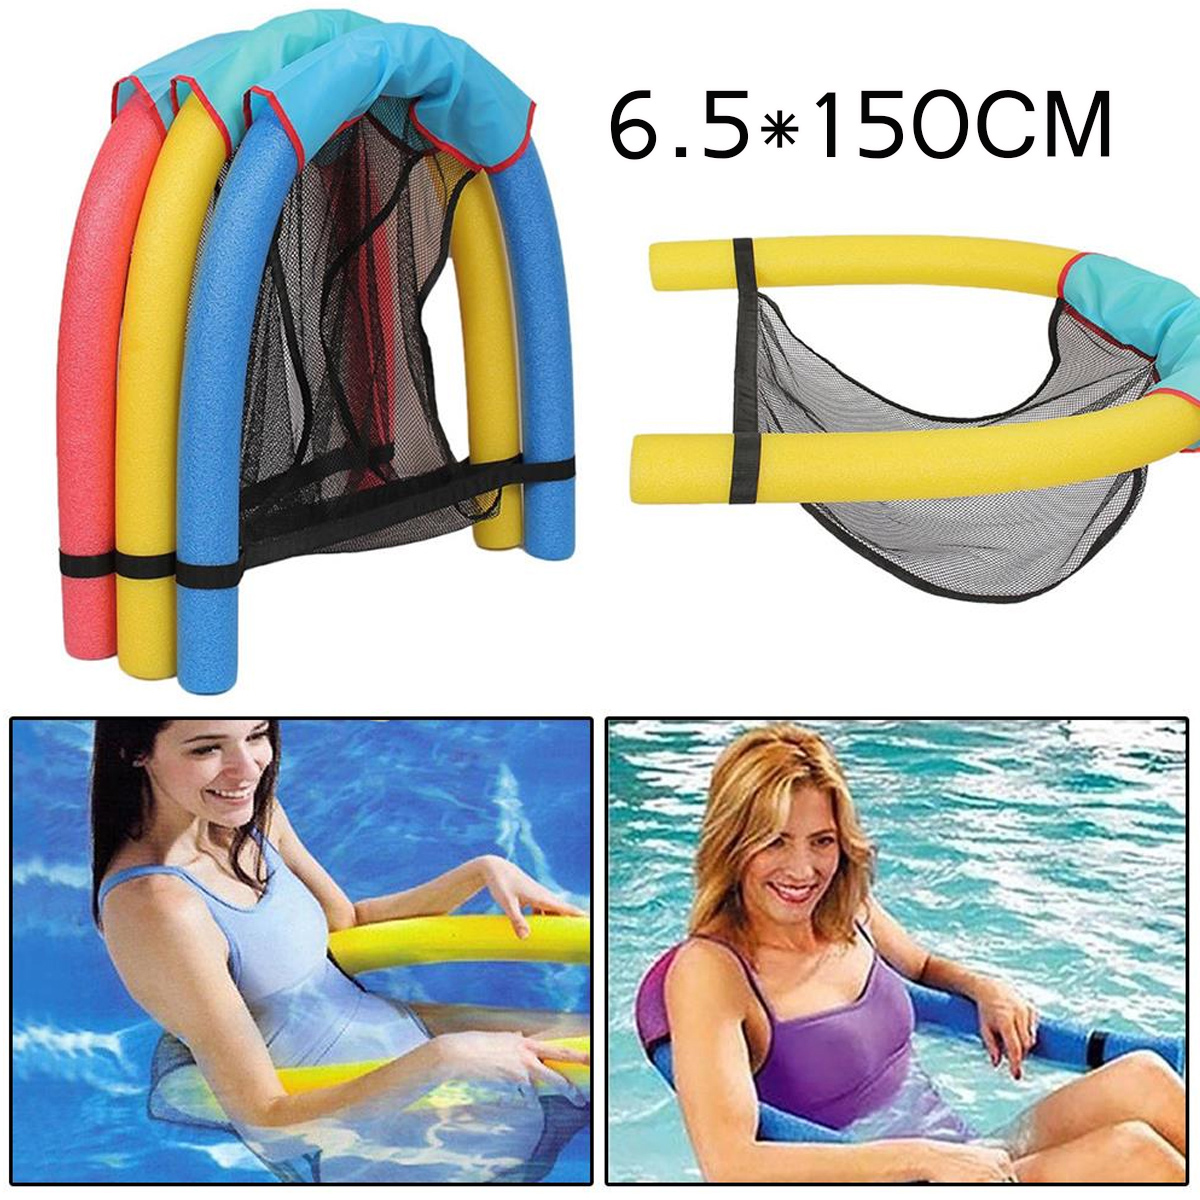 Floating-Pool-Chair-Swimming-Pool-Mesh-Seats-Hammock-Float-Seat-Water-Lounge-Chairs-Travel-Water-Swi-1723803-1